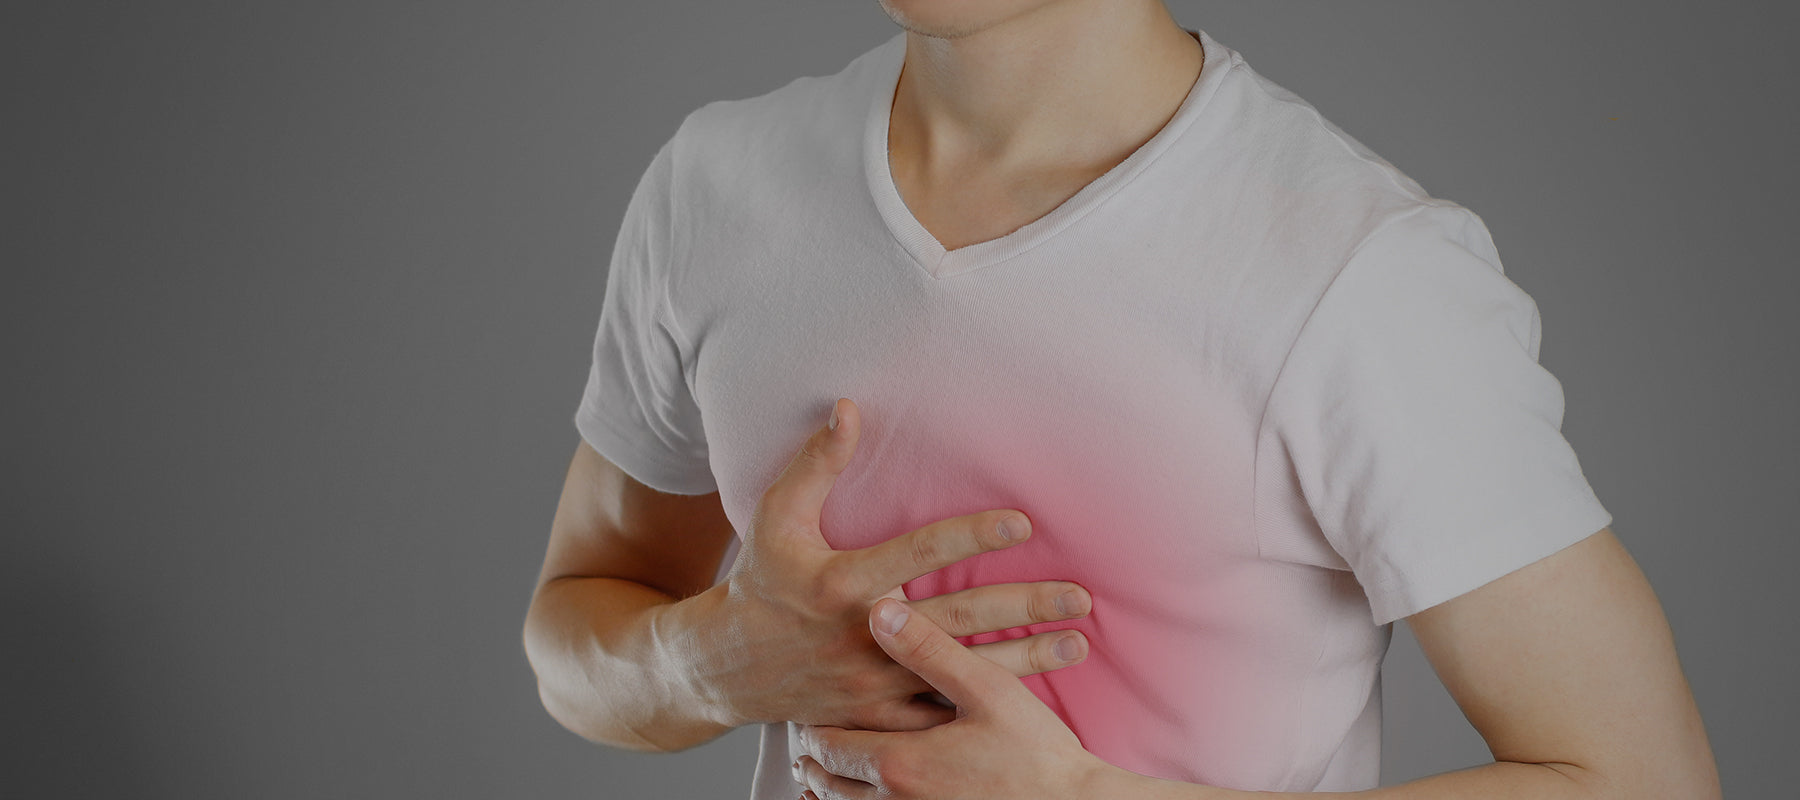 How Long Does Heartburn Last?